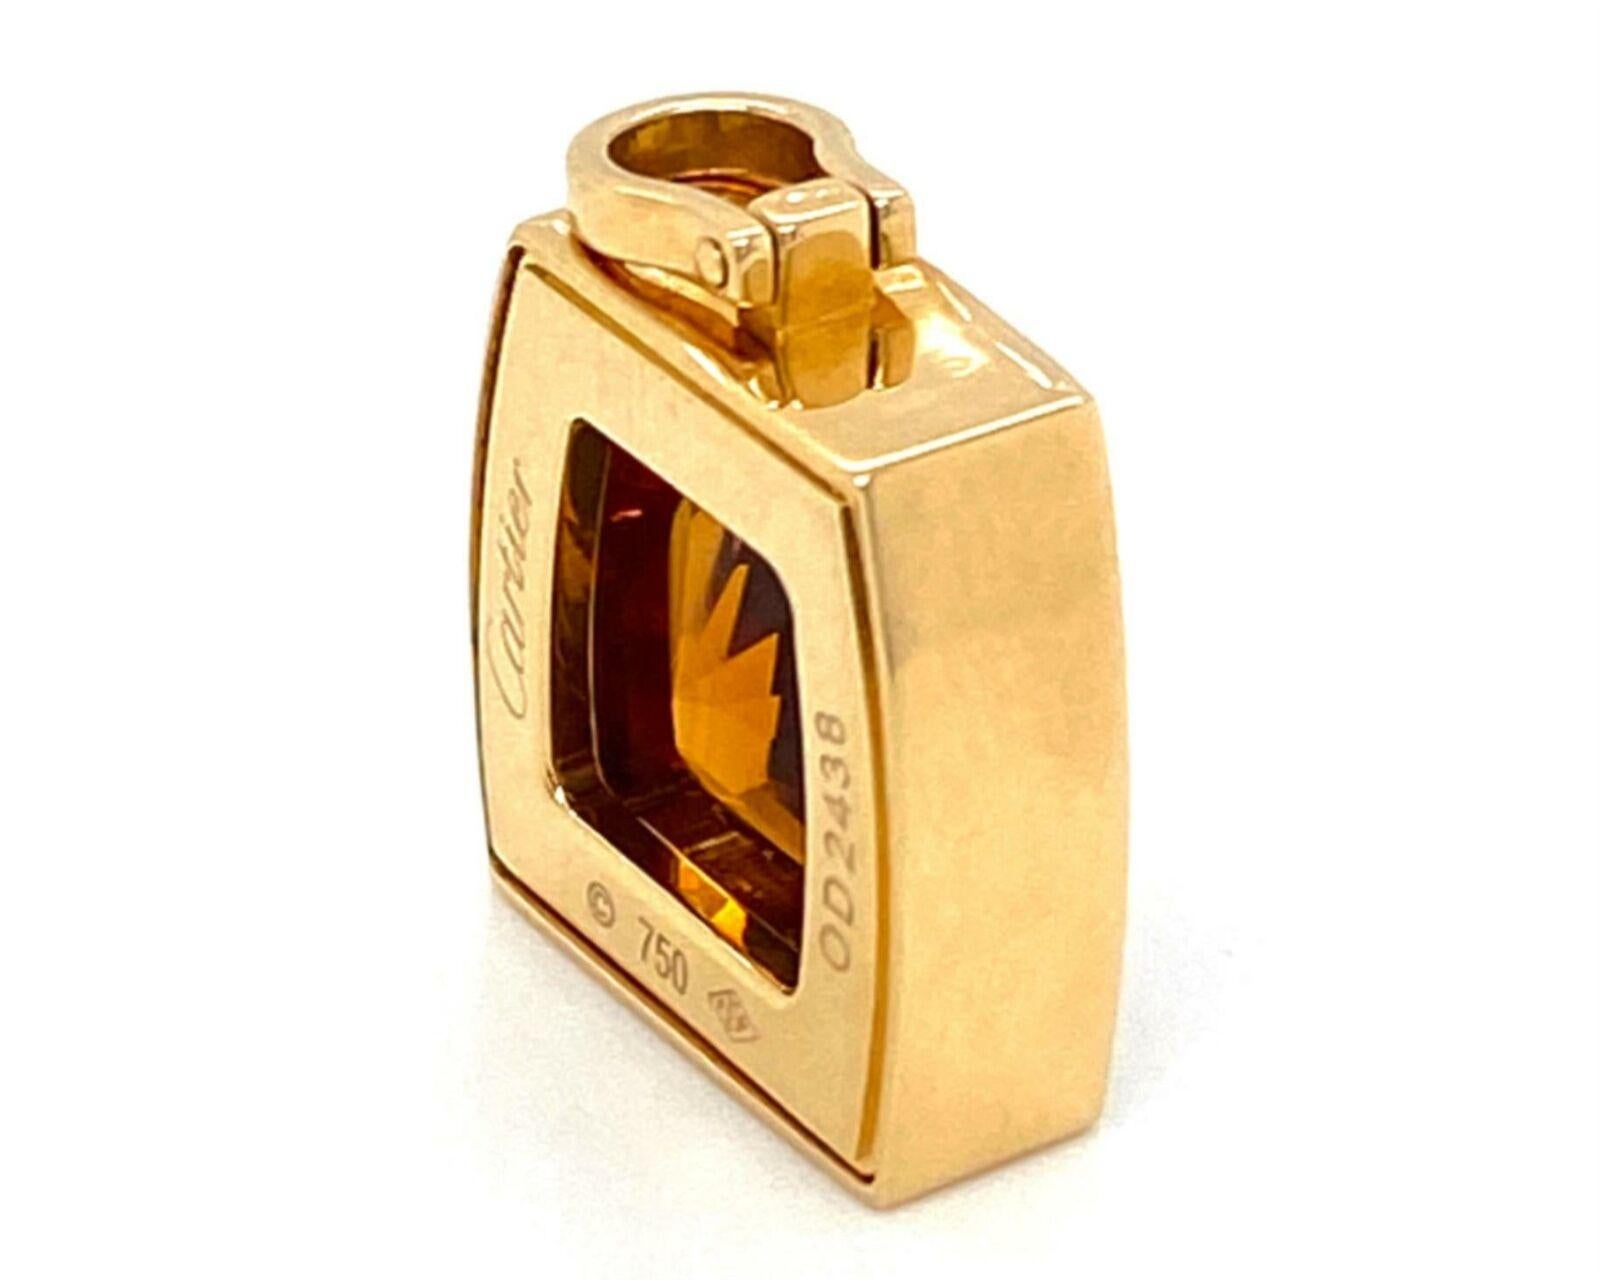  Cartier La Dona Pendentif La Dona en or jaune 18 carats avec certificat Unisexe 